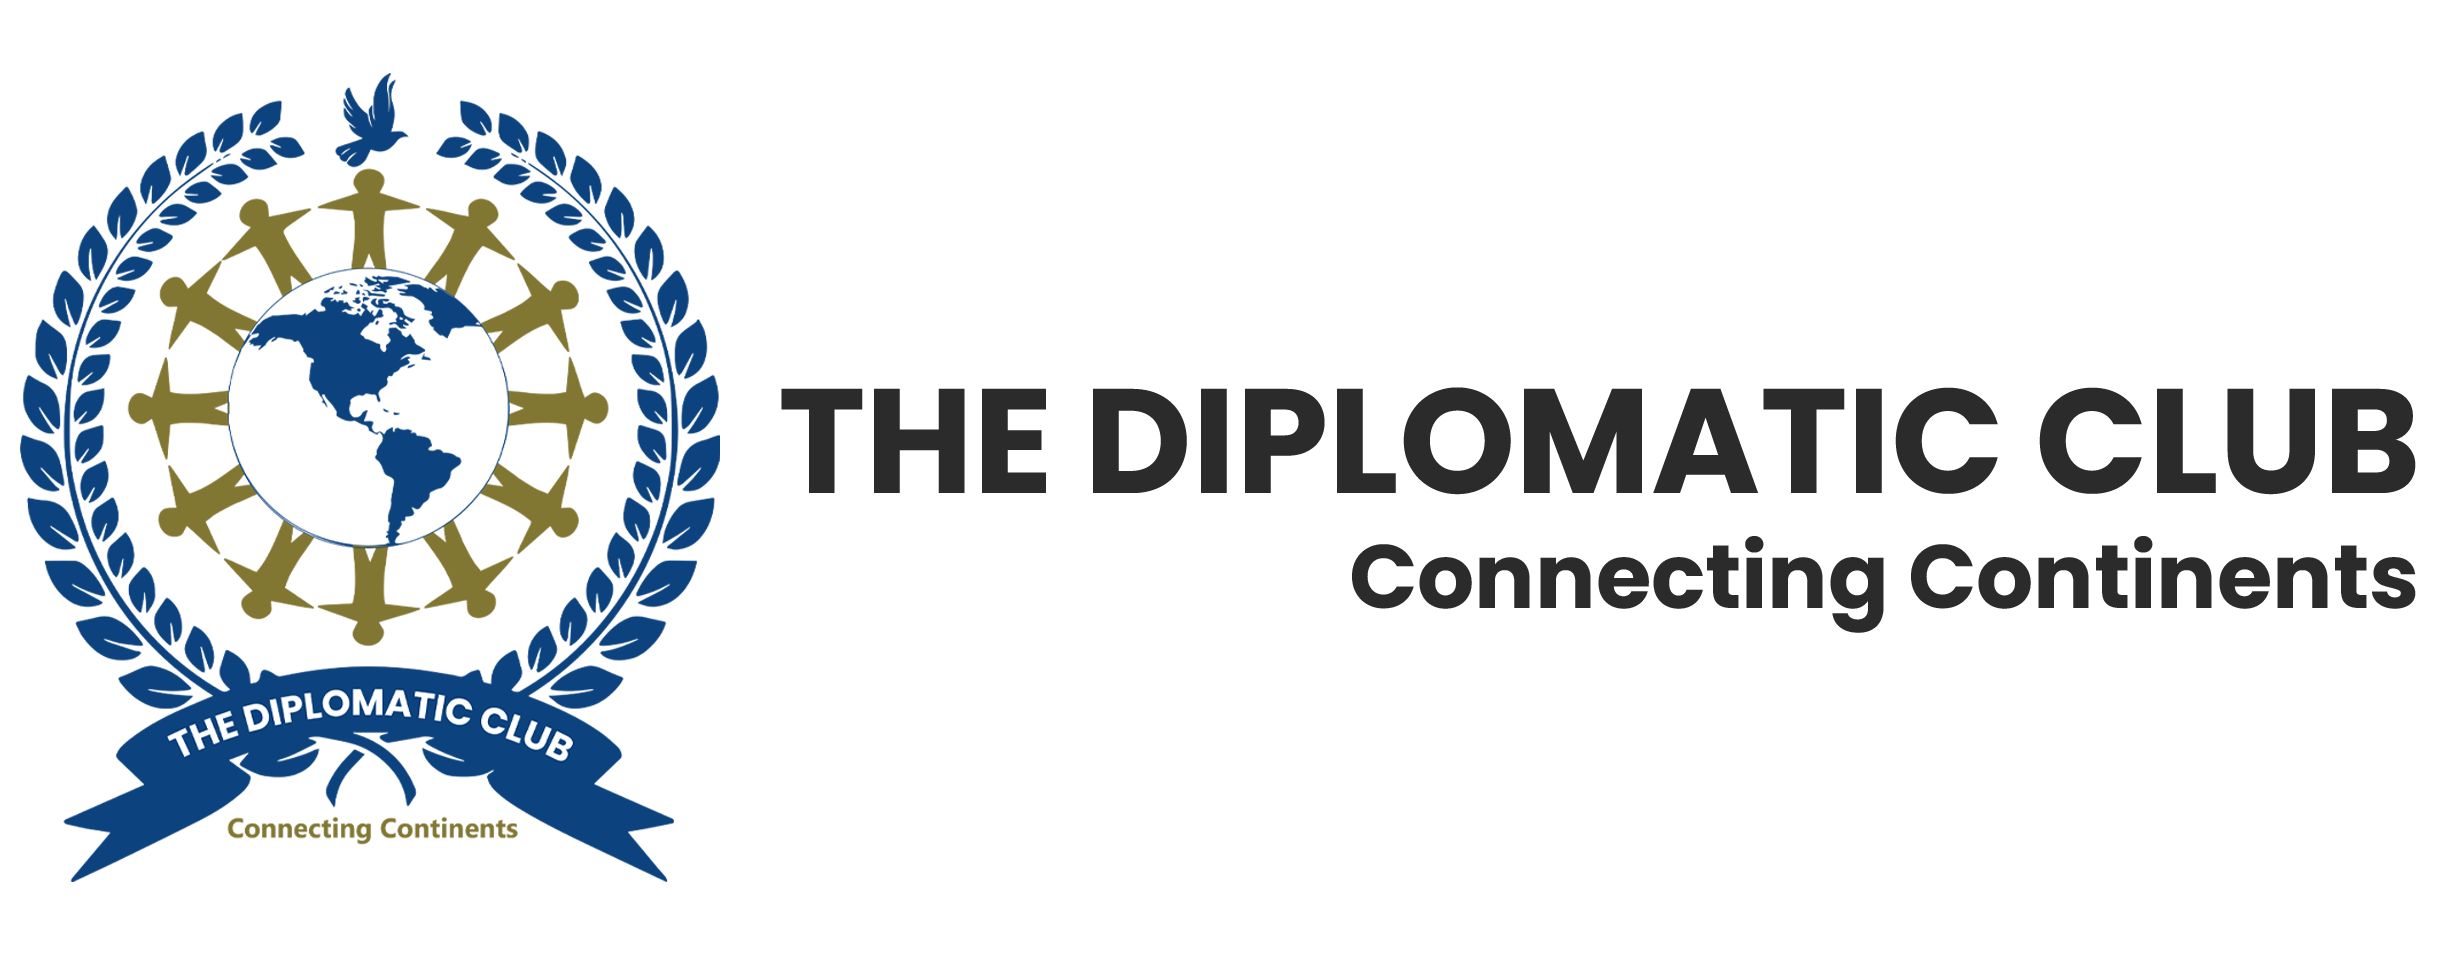 The Diplomatic Club